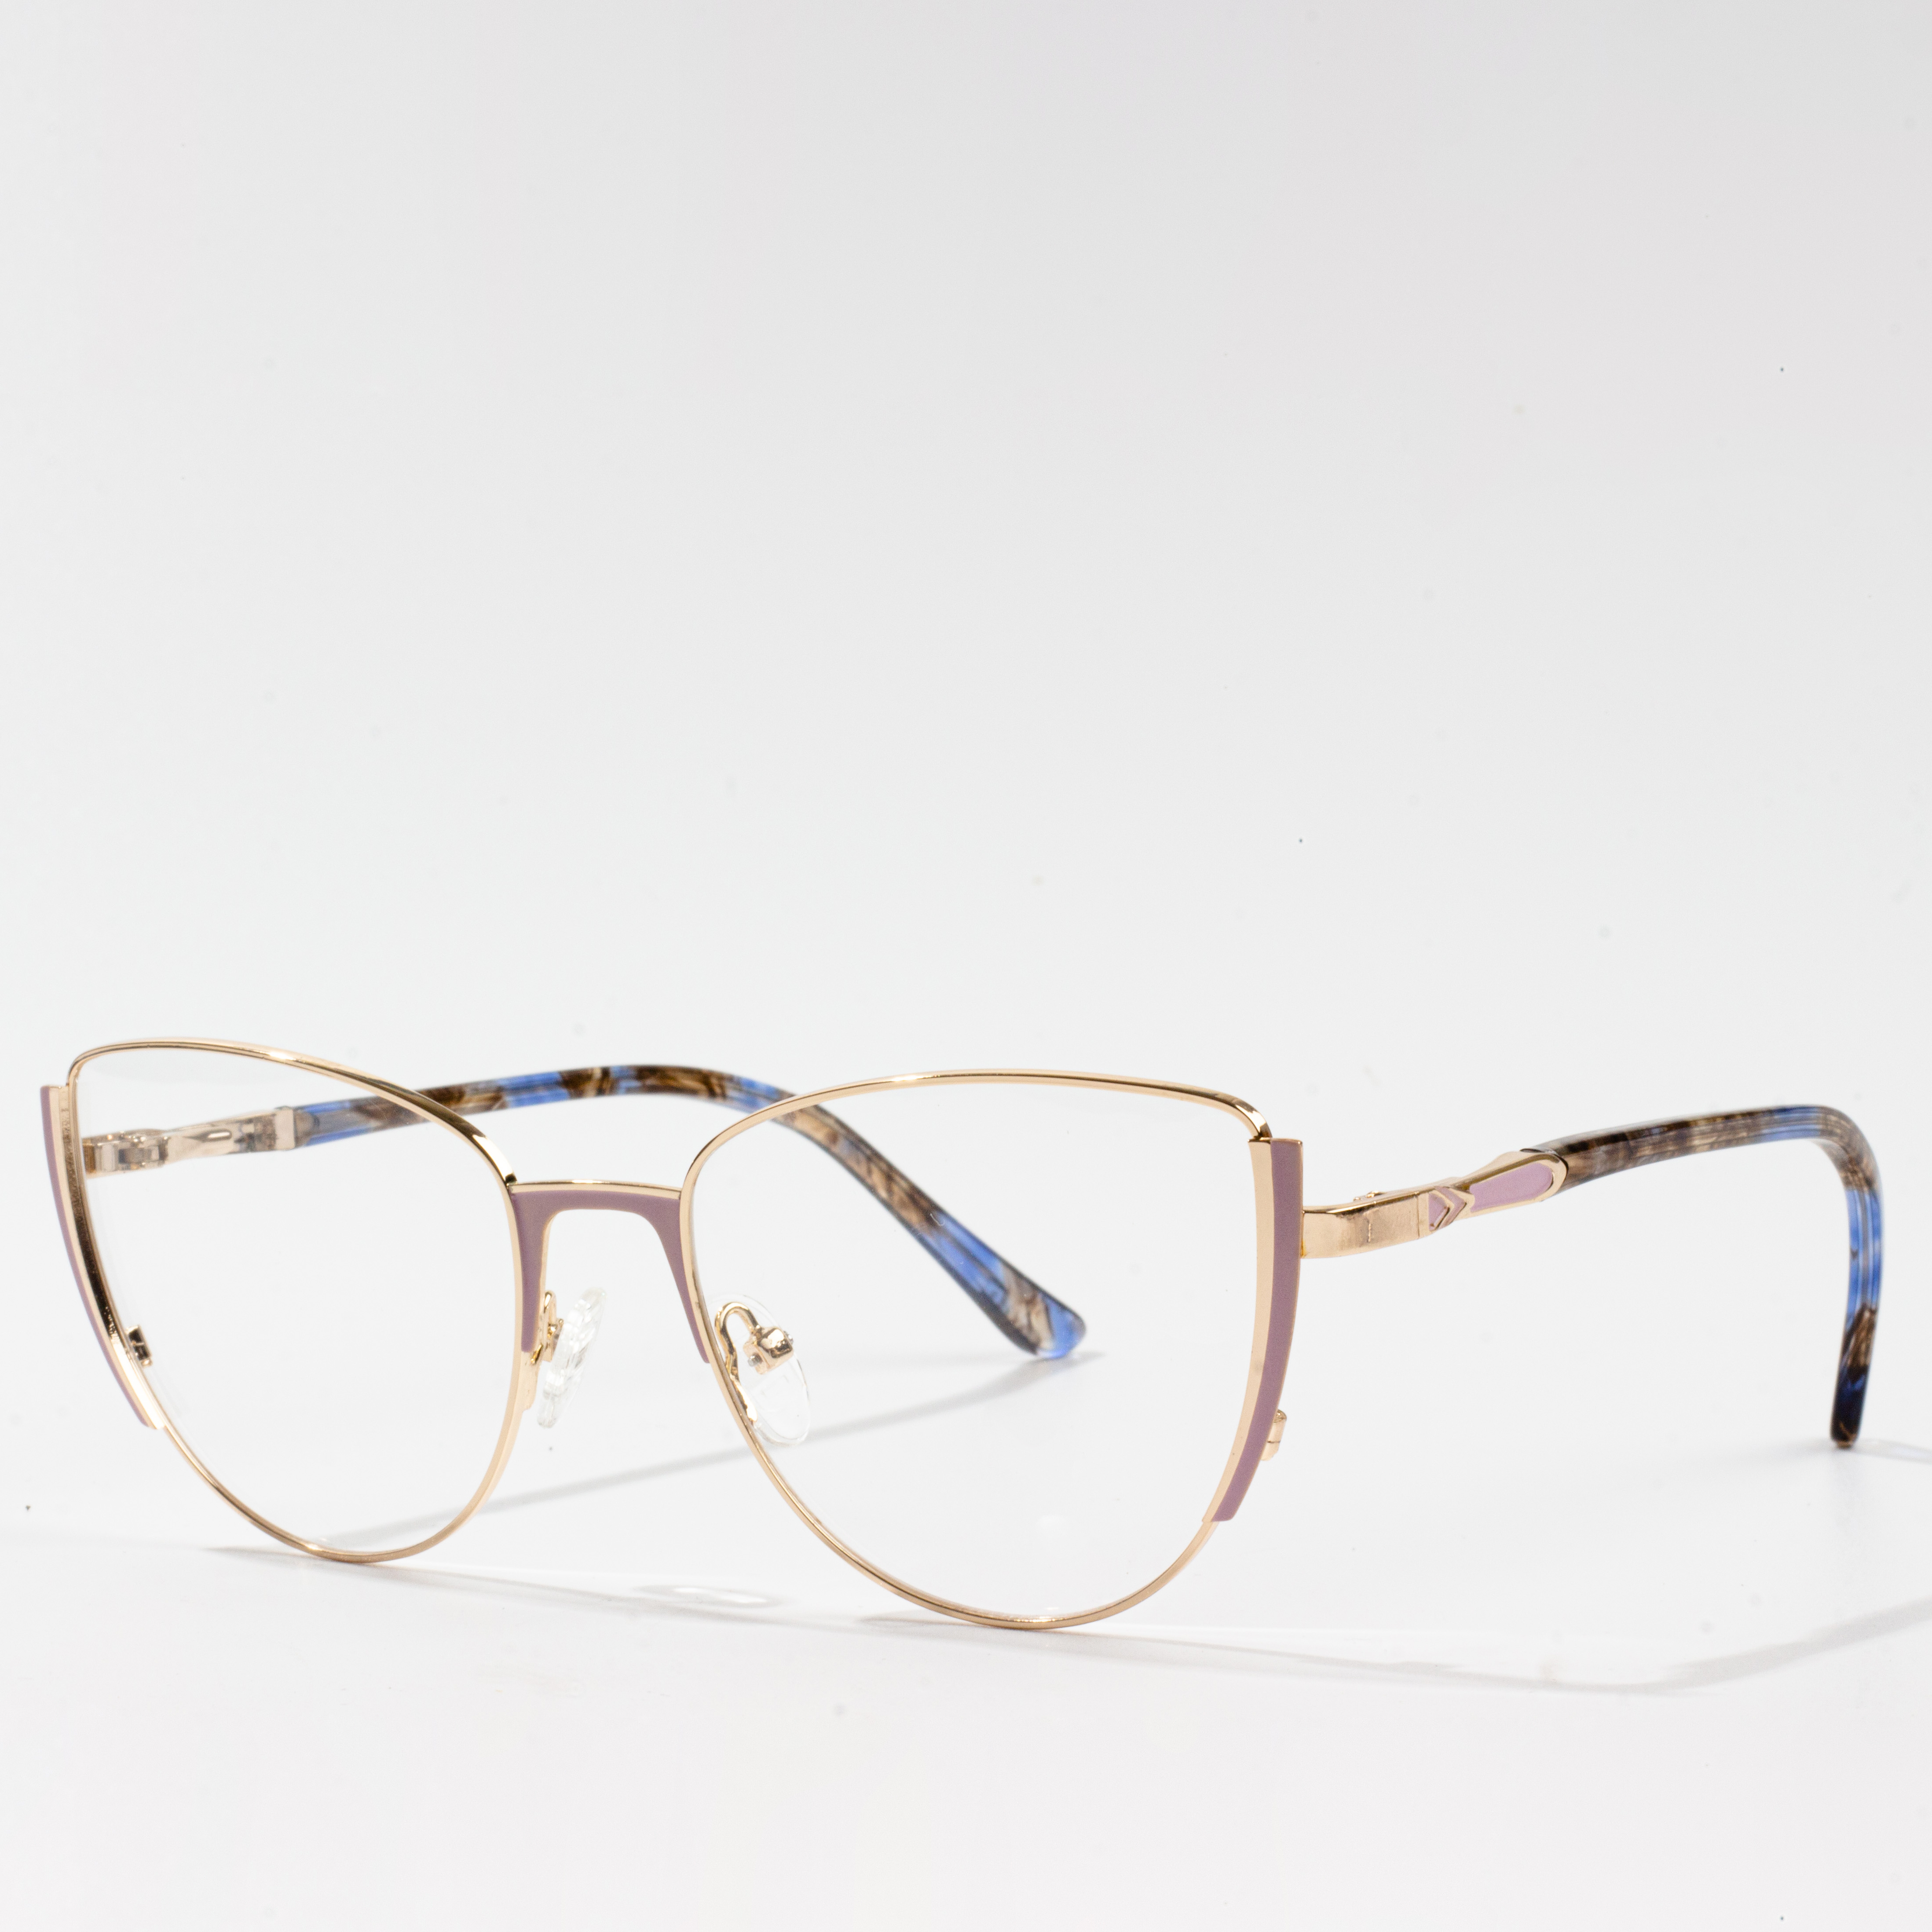 beli bingkai kacamata online